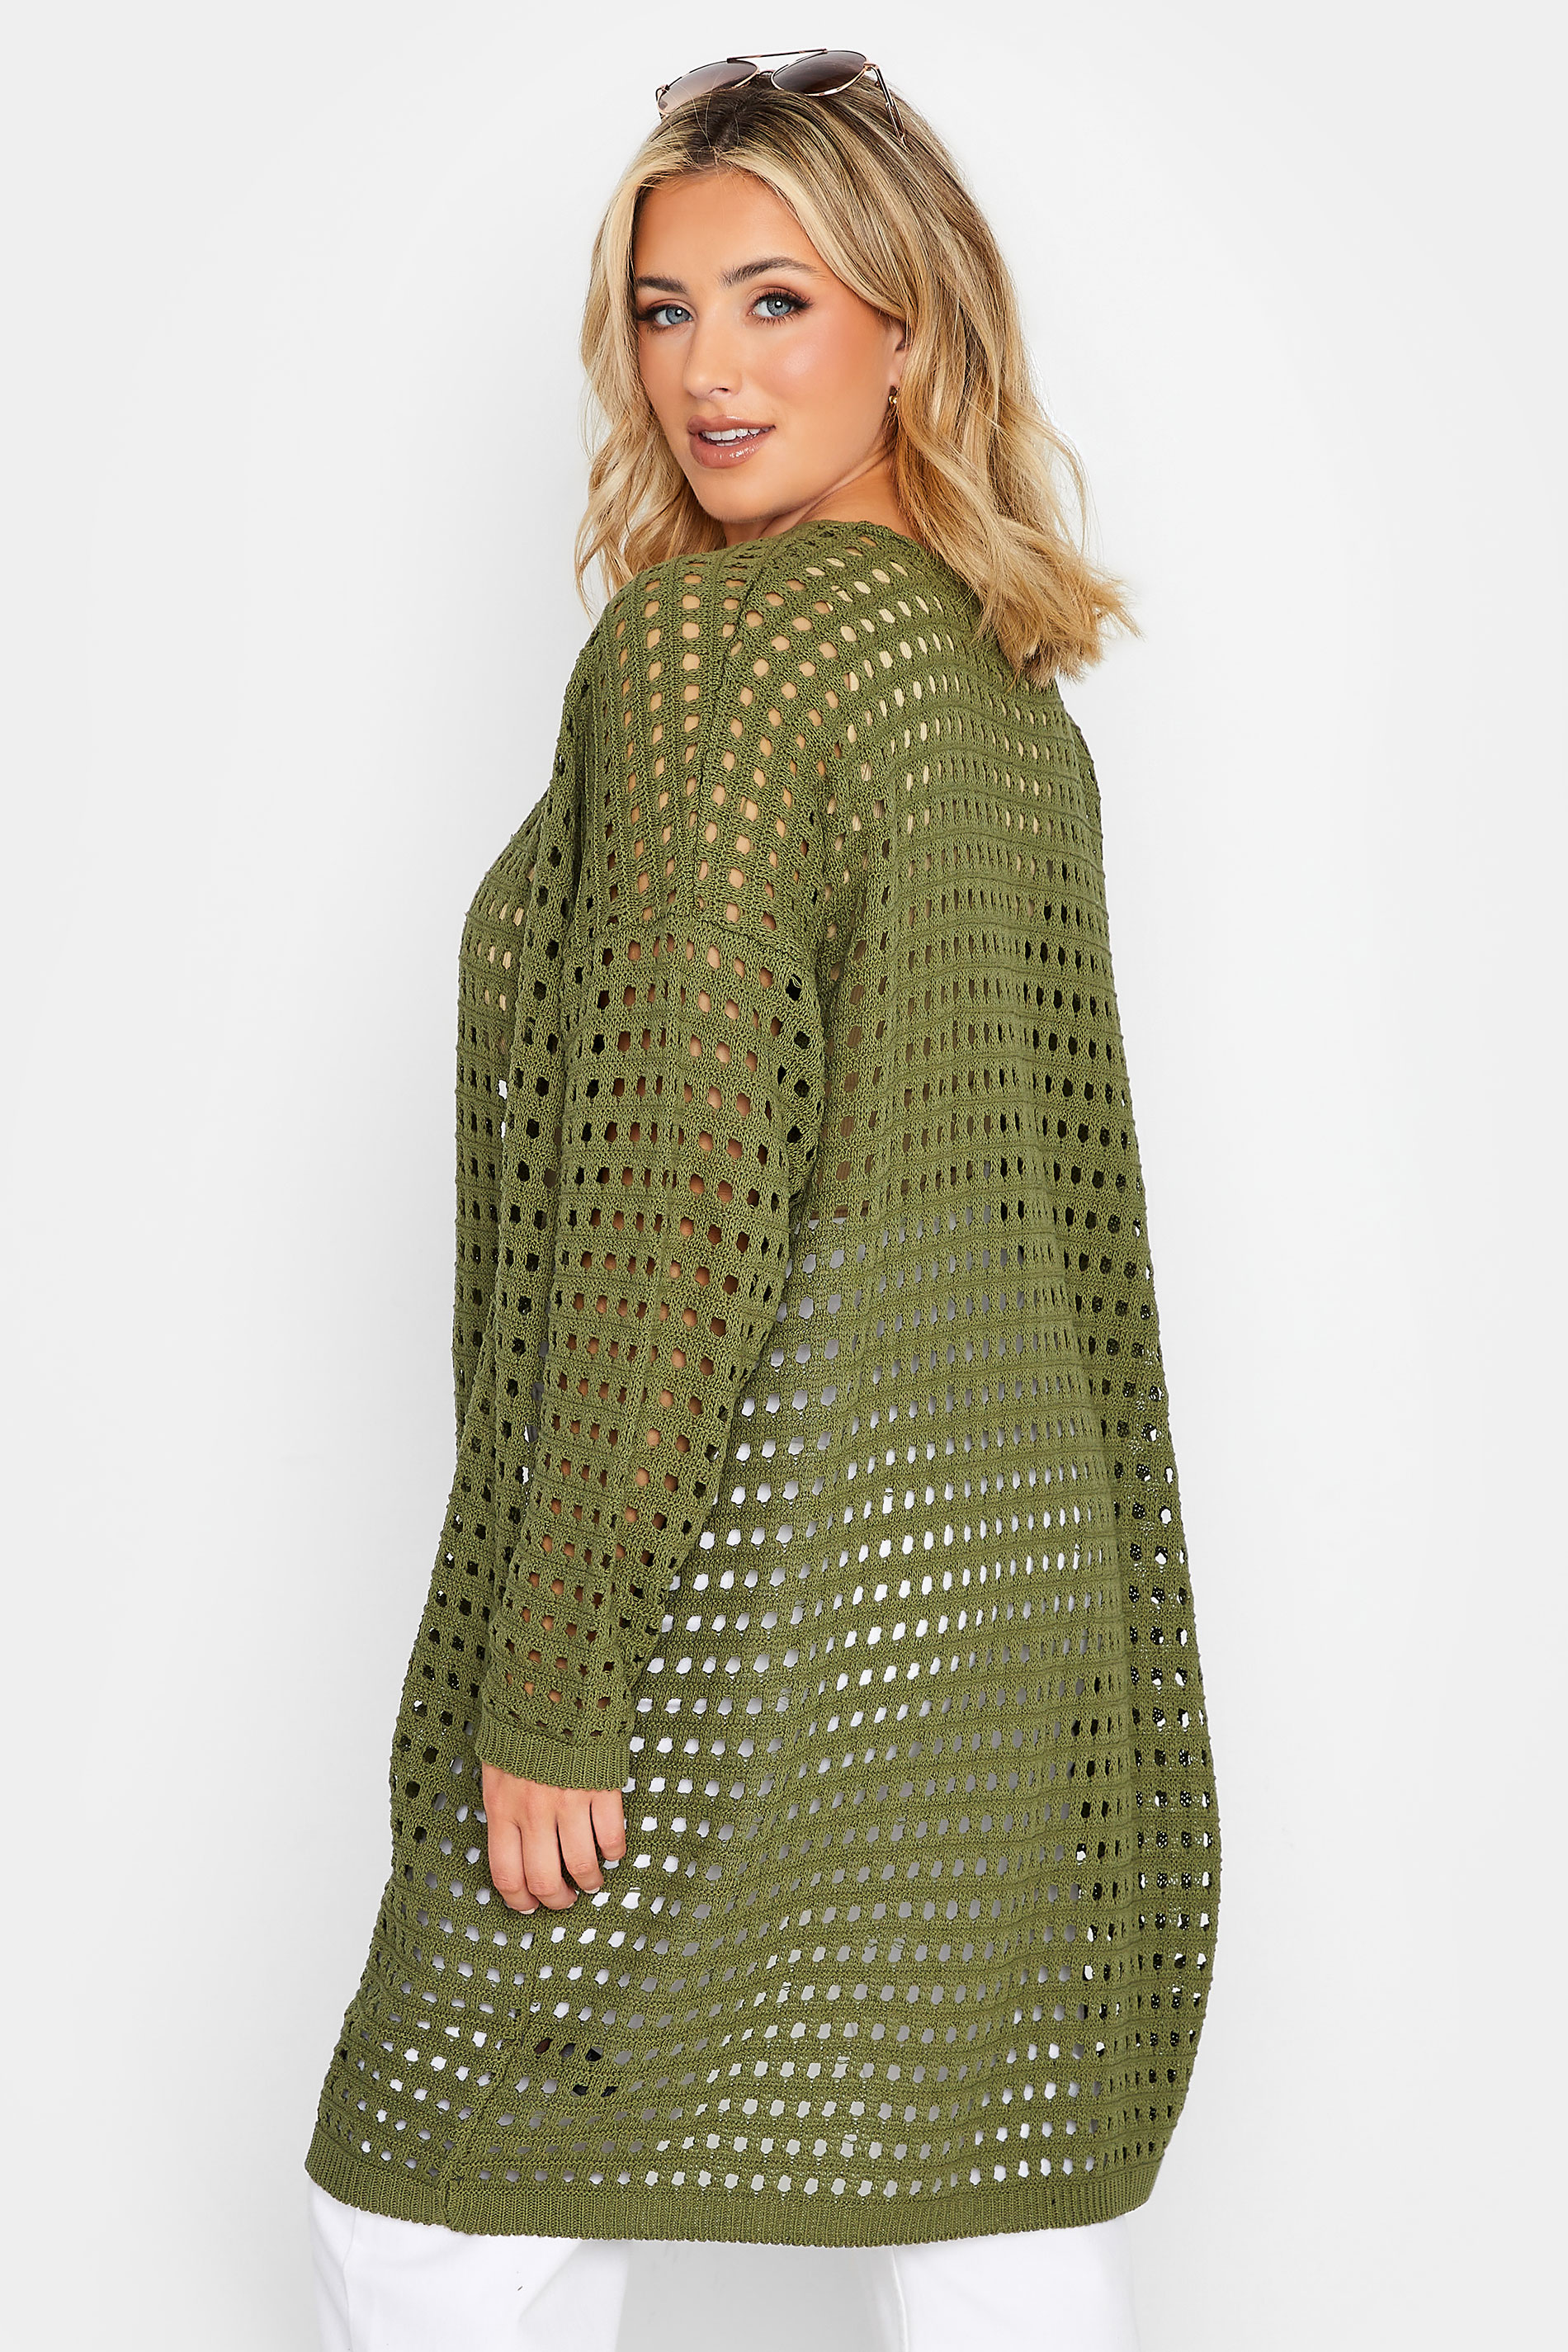 YOURS Plus Size Khaki Green Crochet Cardigan | Yours Clothing 3